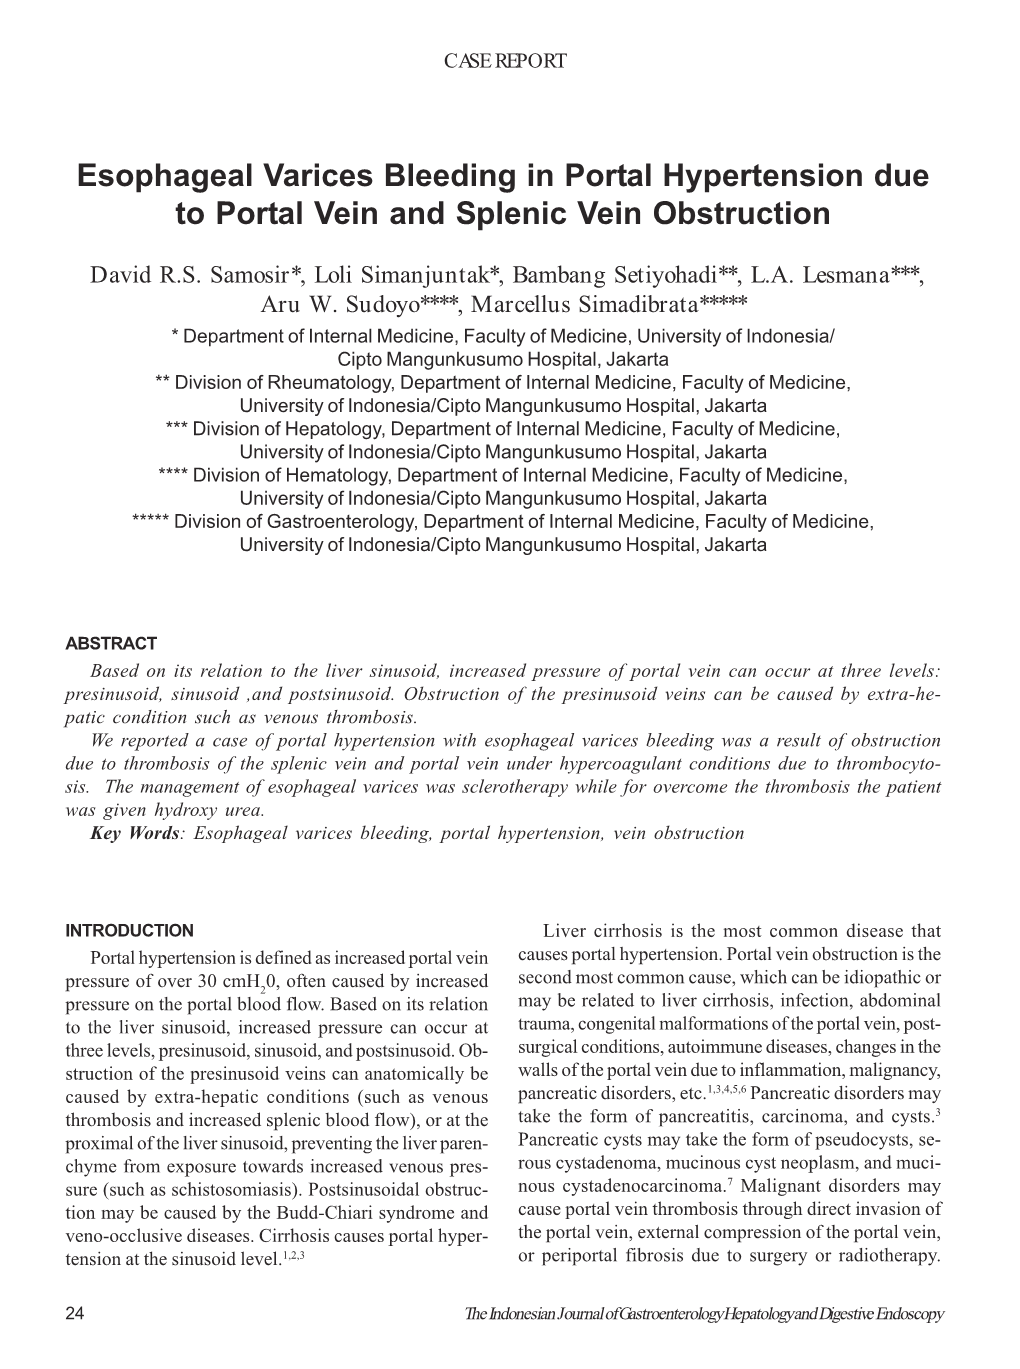 Esophageal Varices Bleeding in Portal Hypertension Due to Portal Vein and Splenic Vein Obstruction